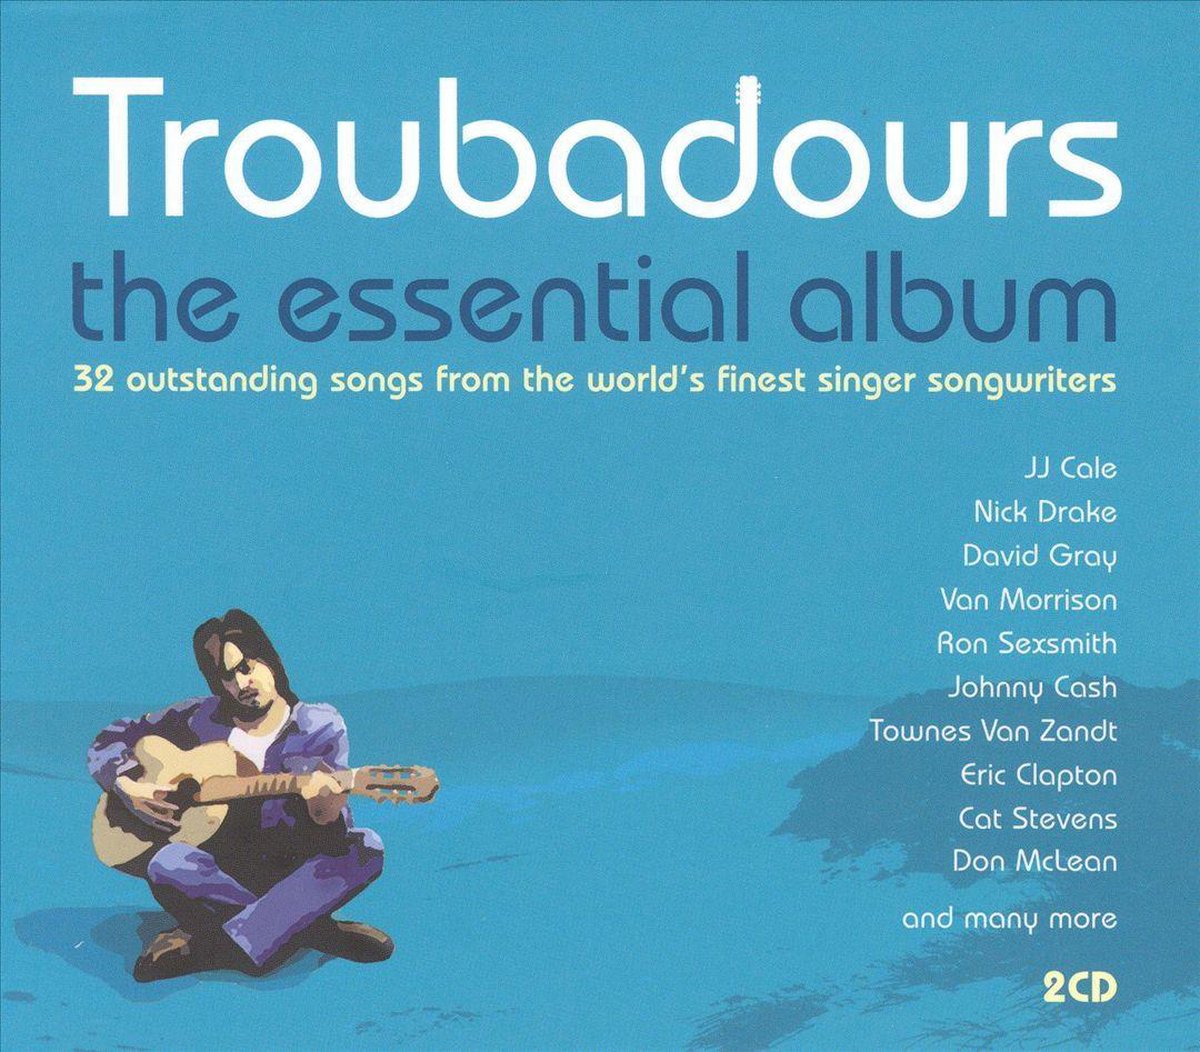 Troubadours: The Essential Album - various artists